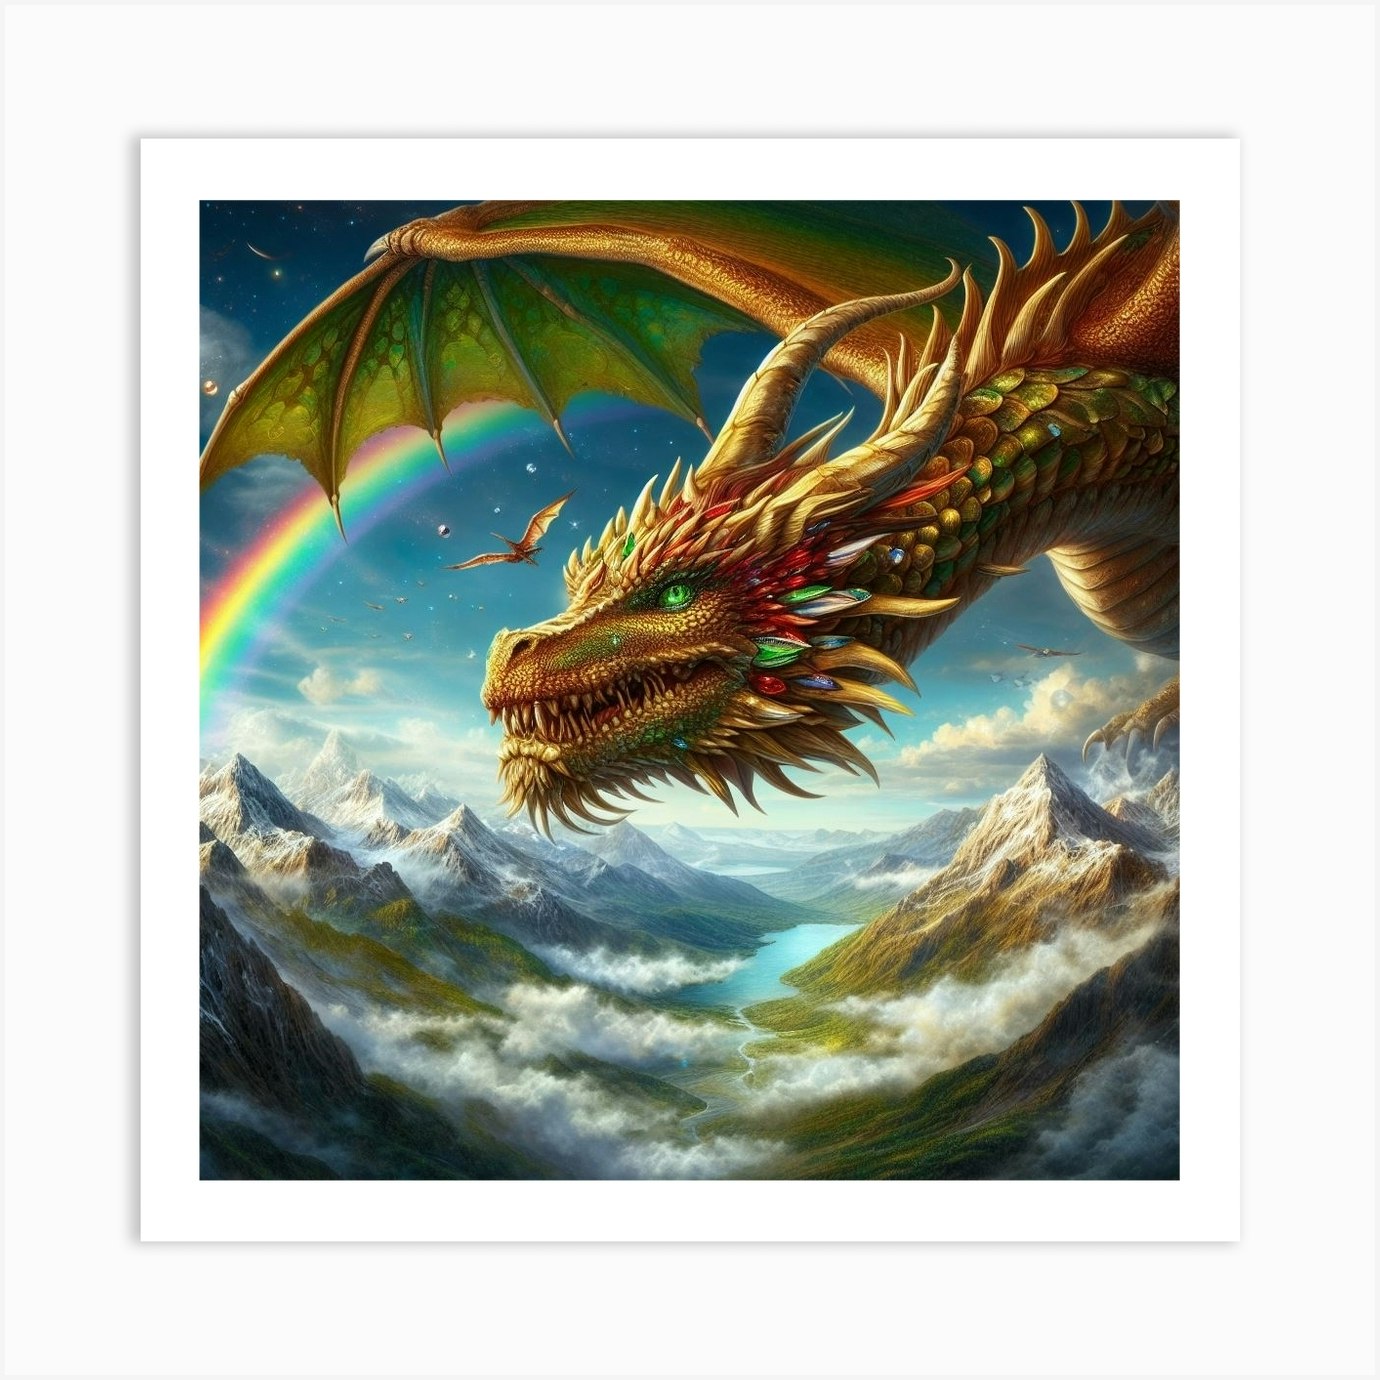 Diamond Painting - Golden Dragon 